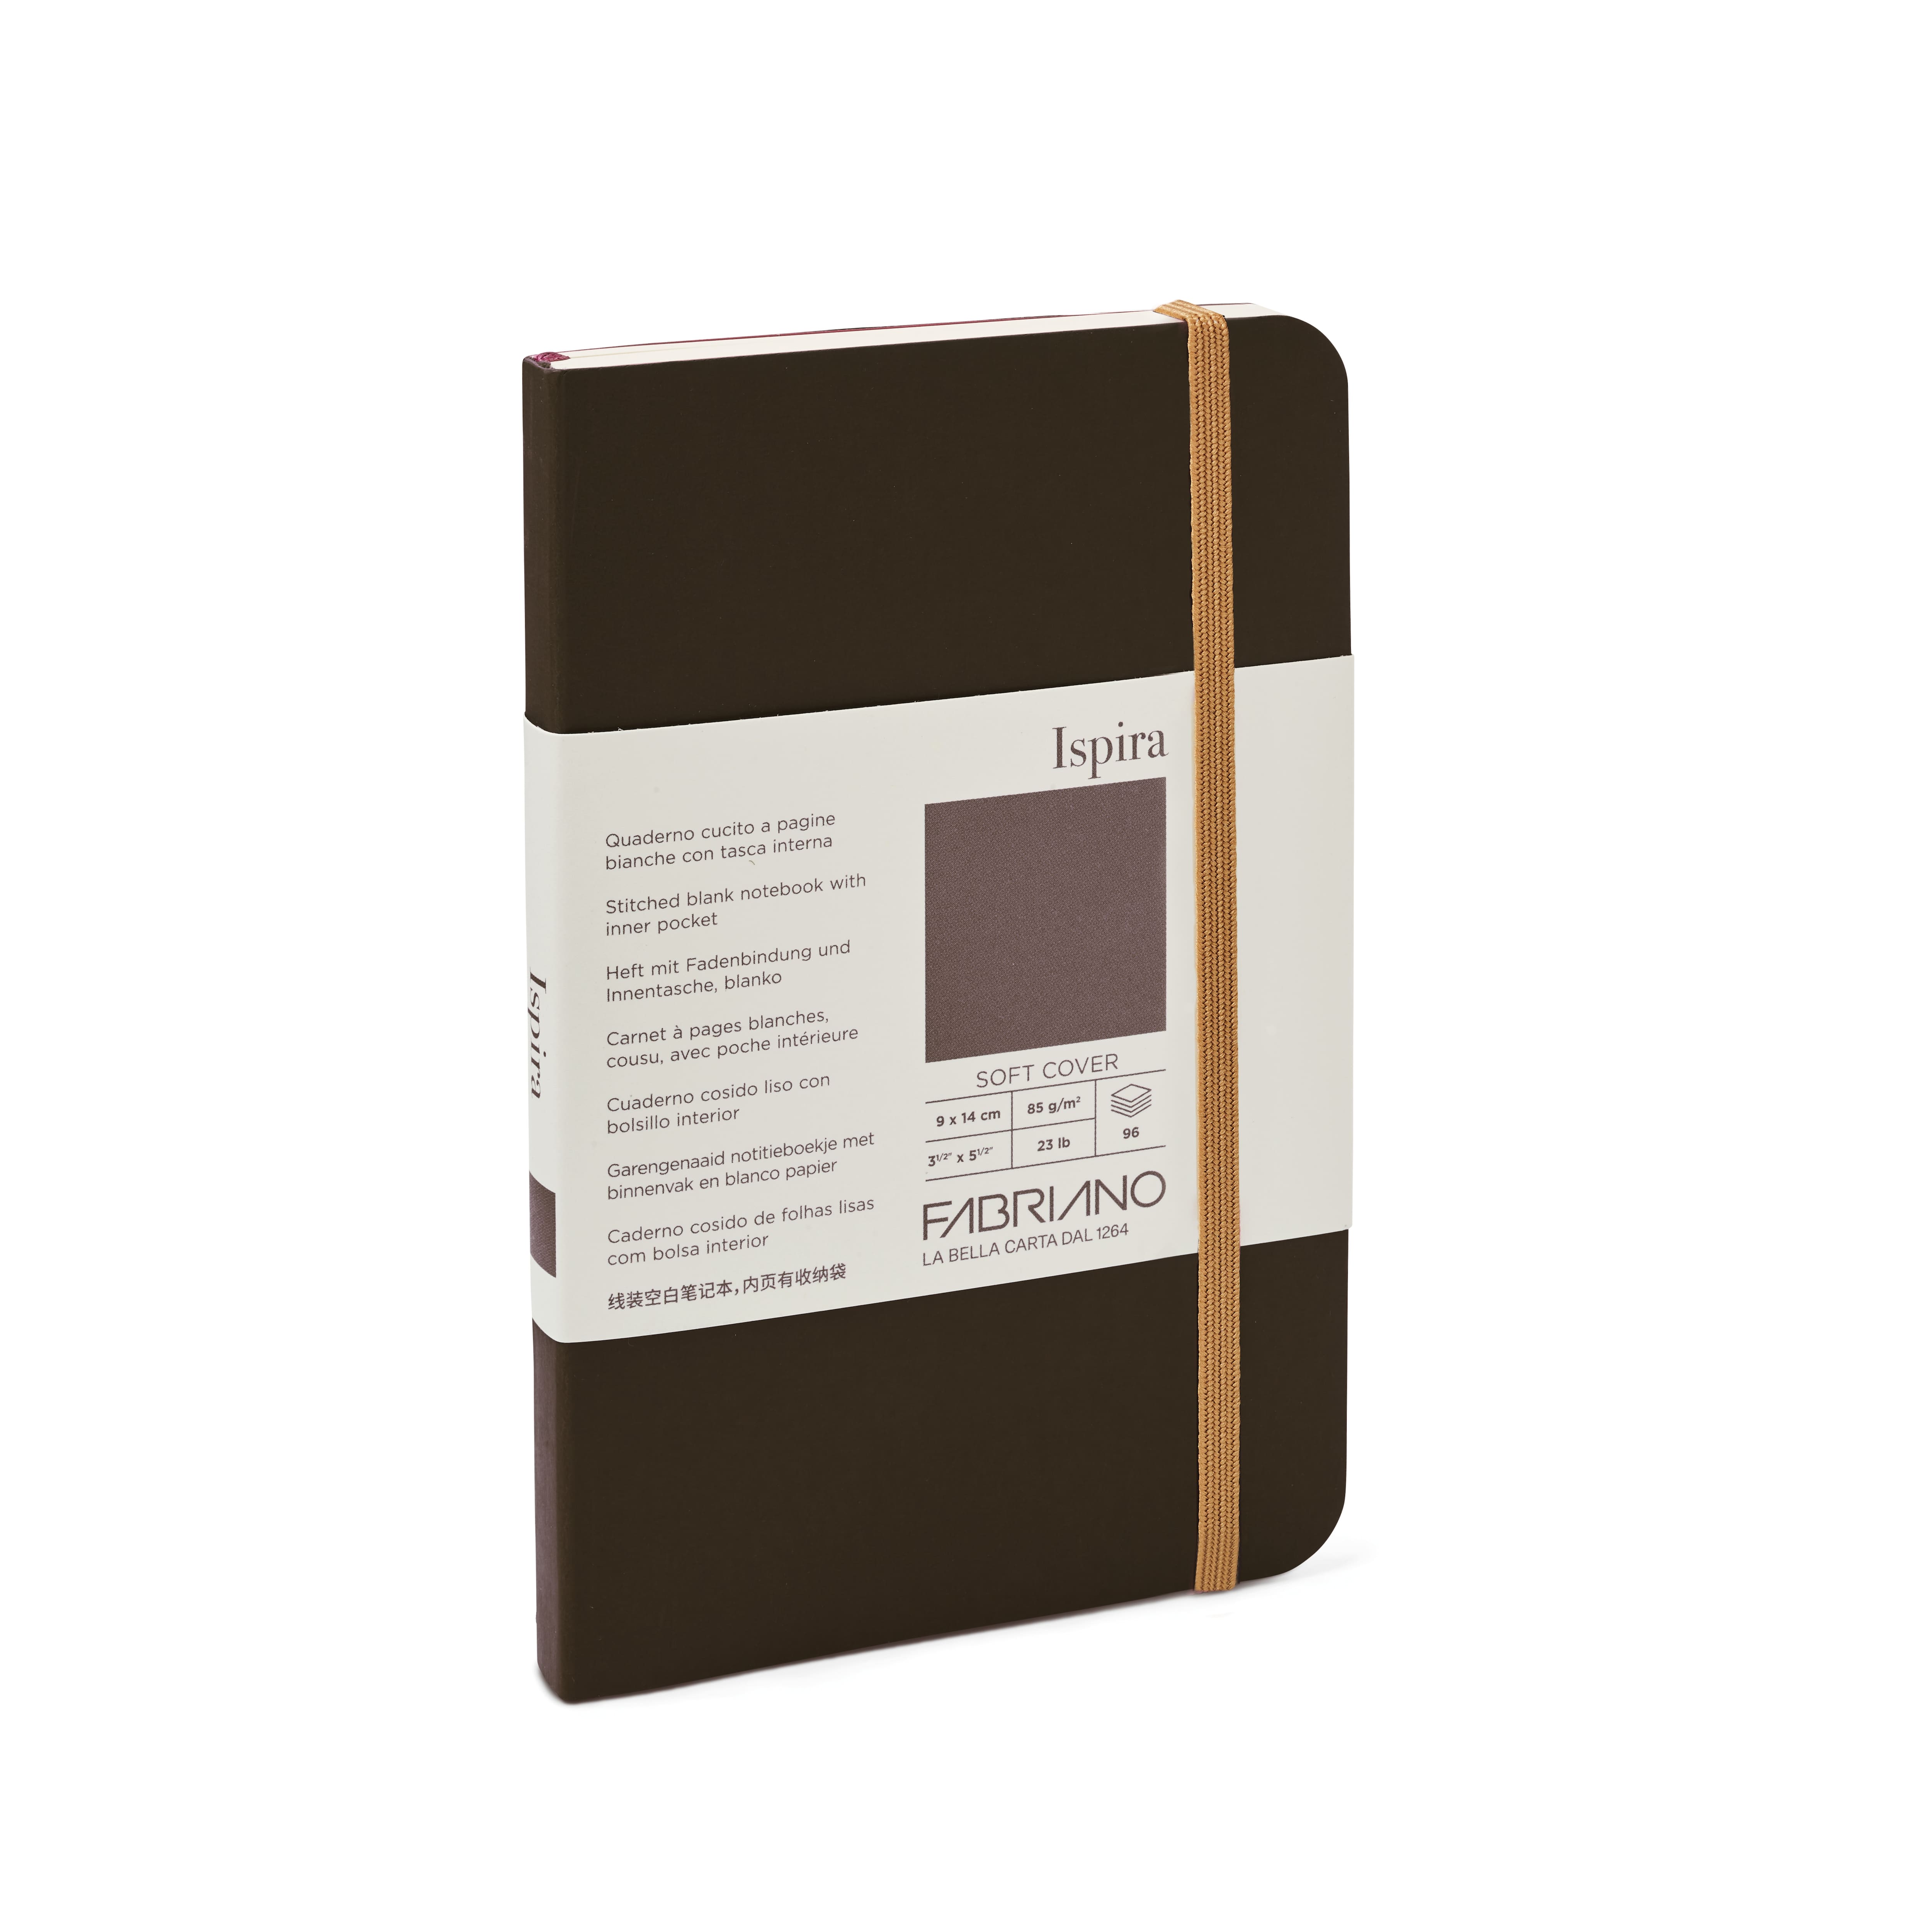 Fabriano&#xAE; Ispira Blank Soft Cover Notebook